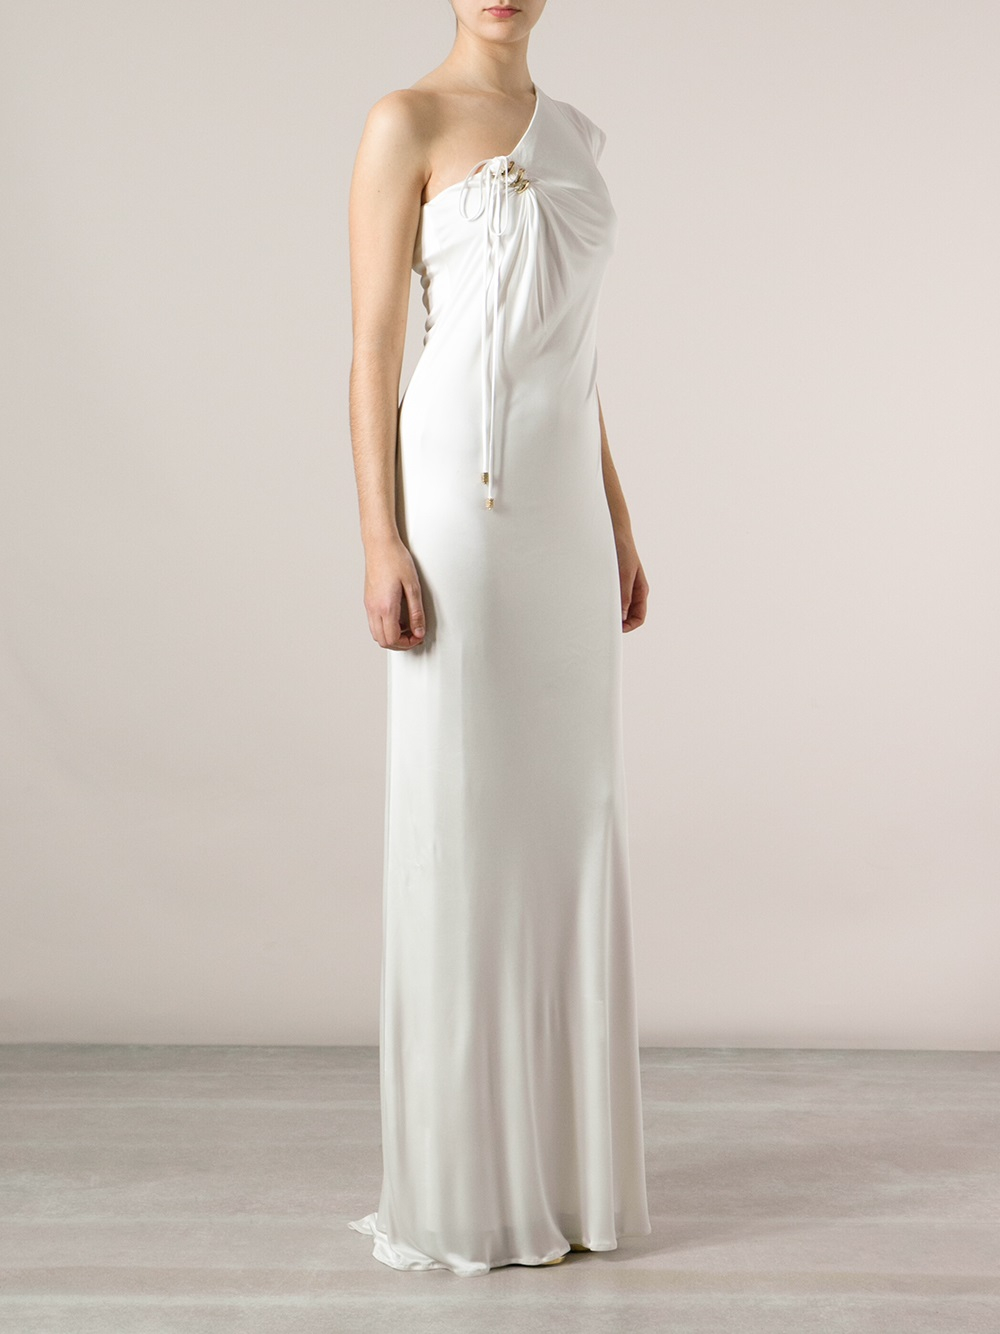 Lyst - Roberto Cavalli Asymmetric Gown in White